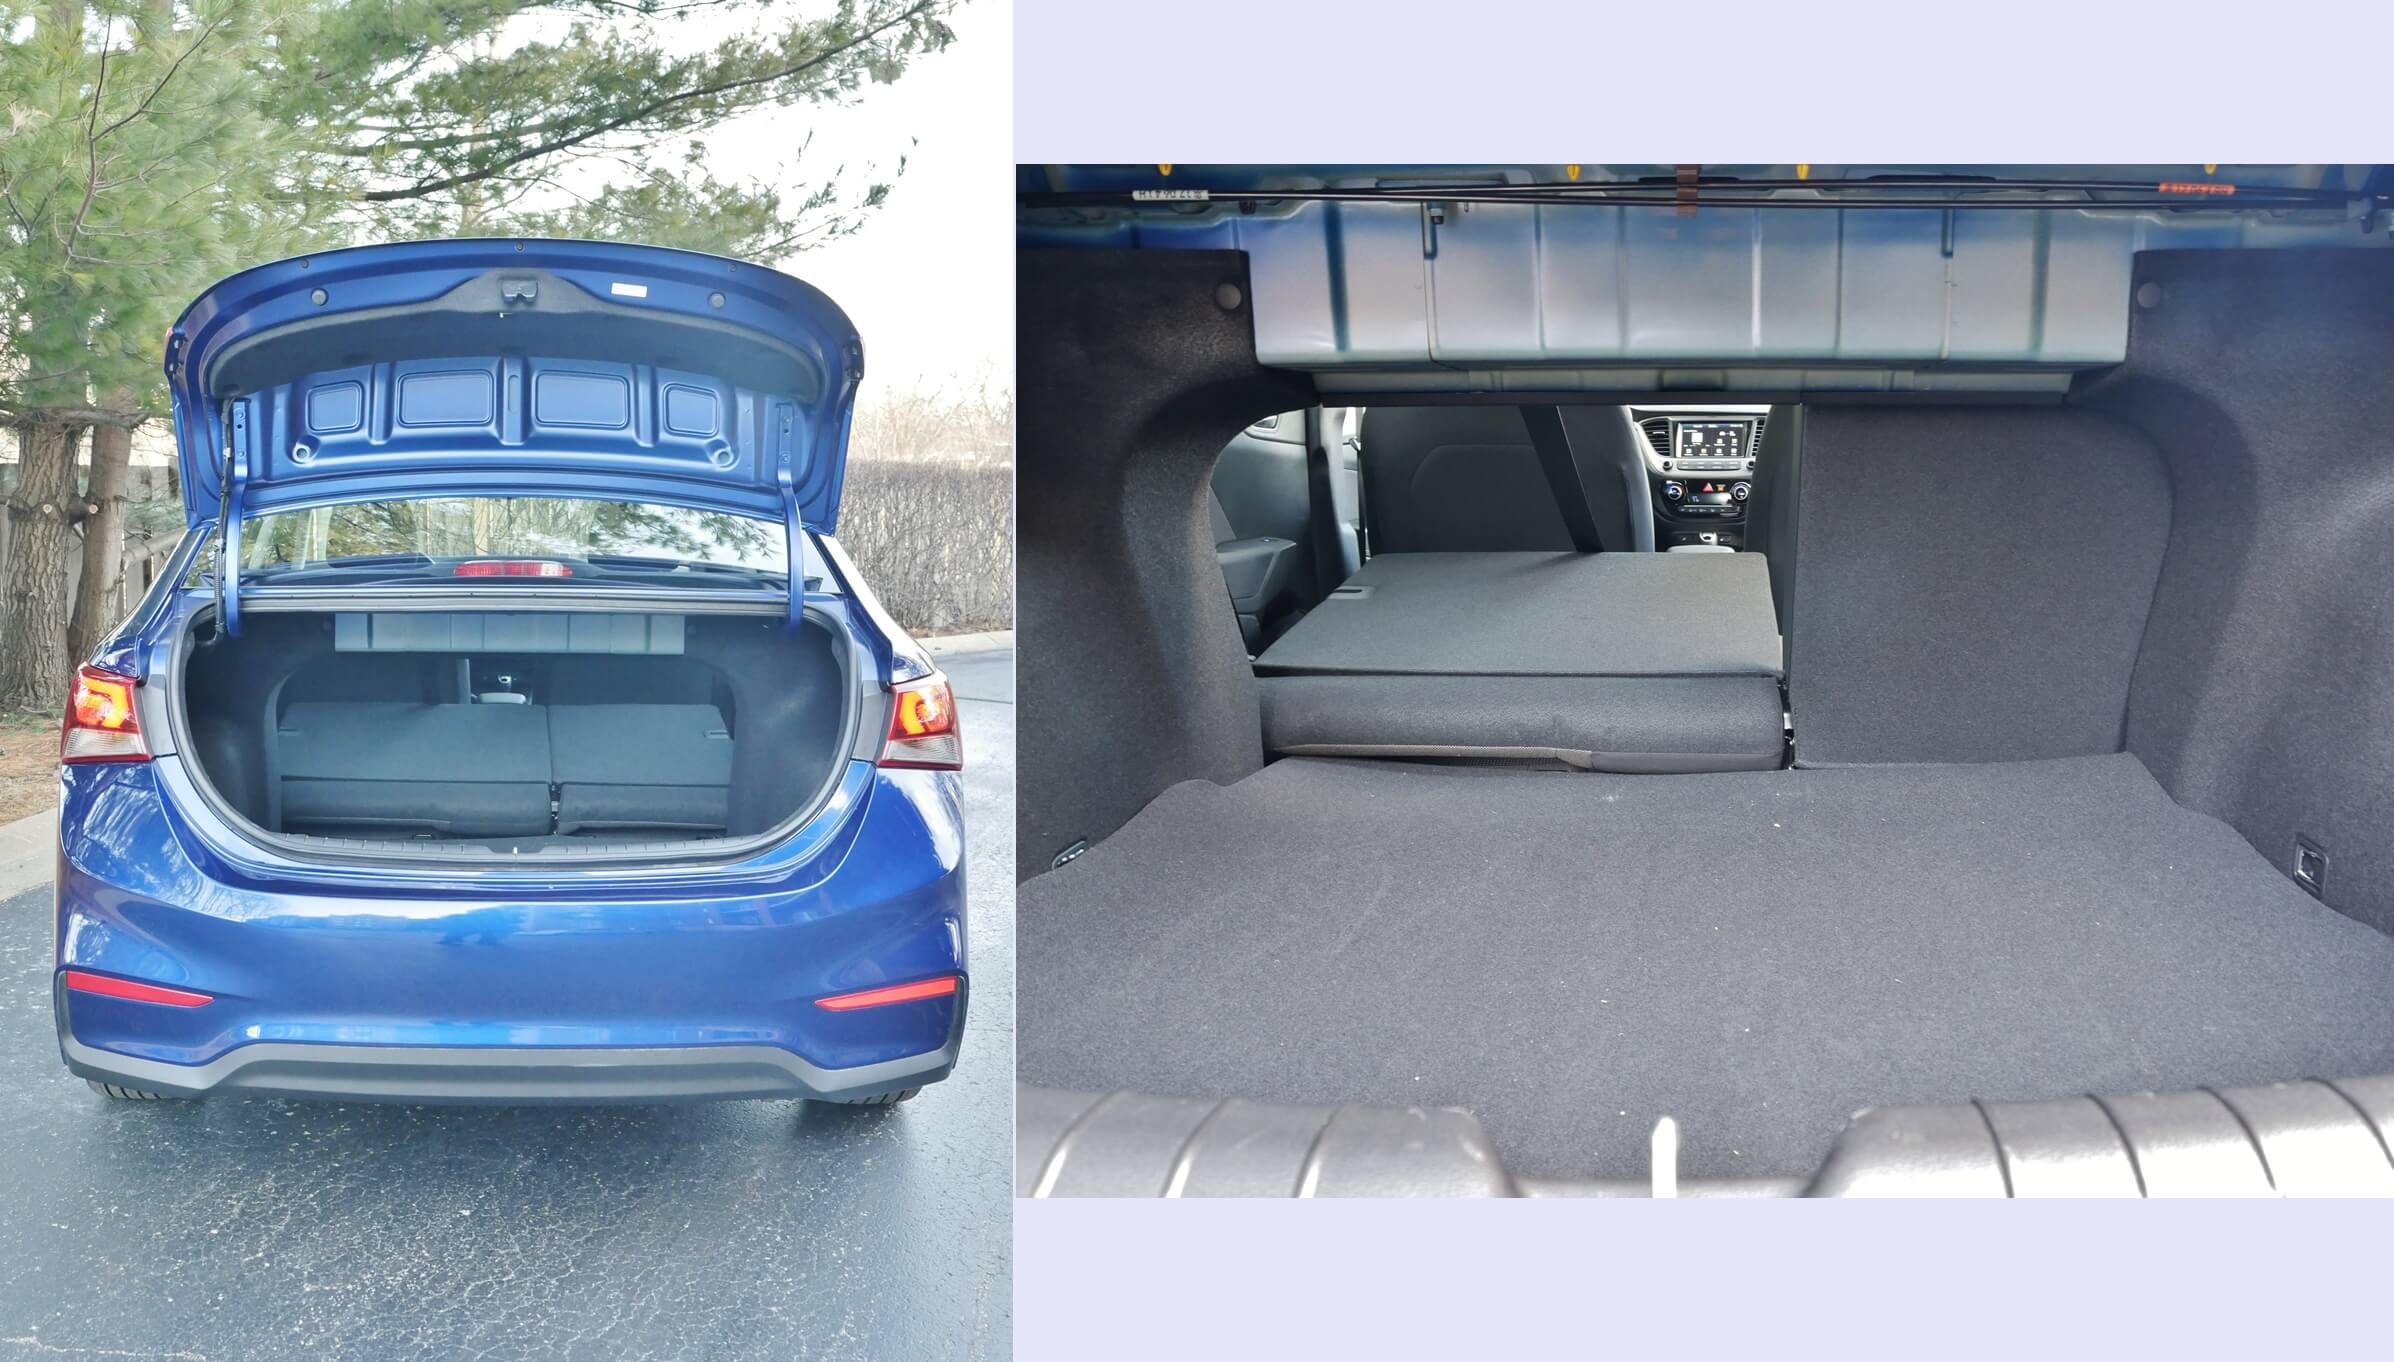 2018 Hyundai Accent Limited: 13.7 cubic foot trunk expands via 60/40% split folding rear seat backs.